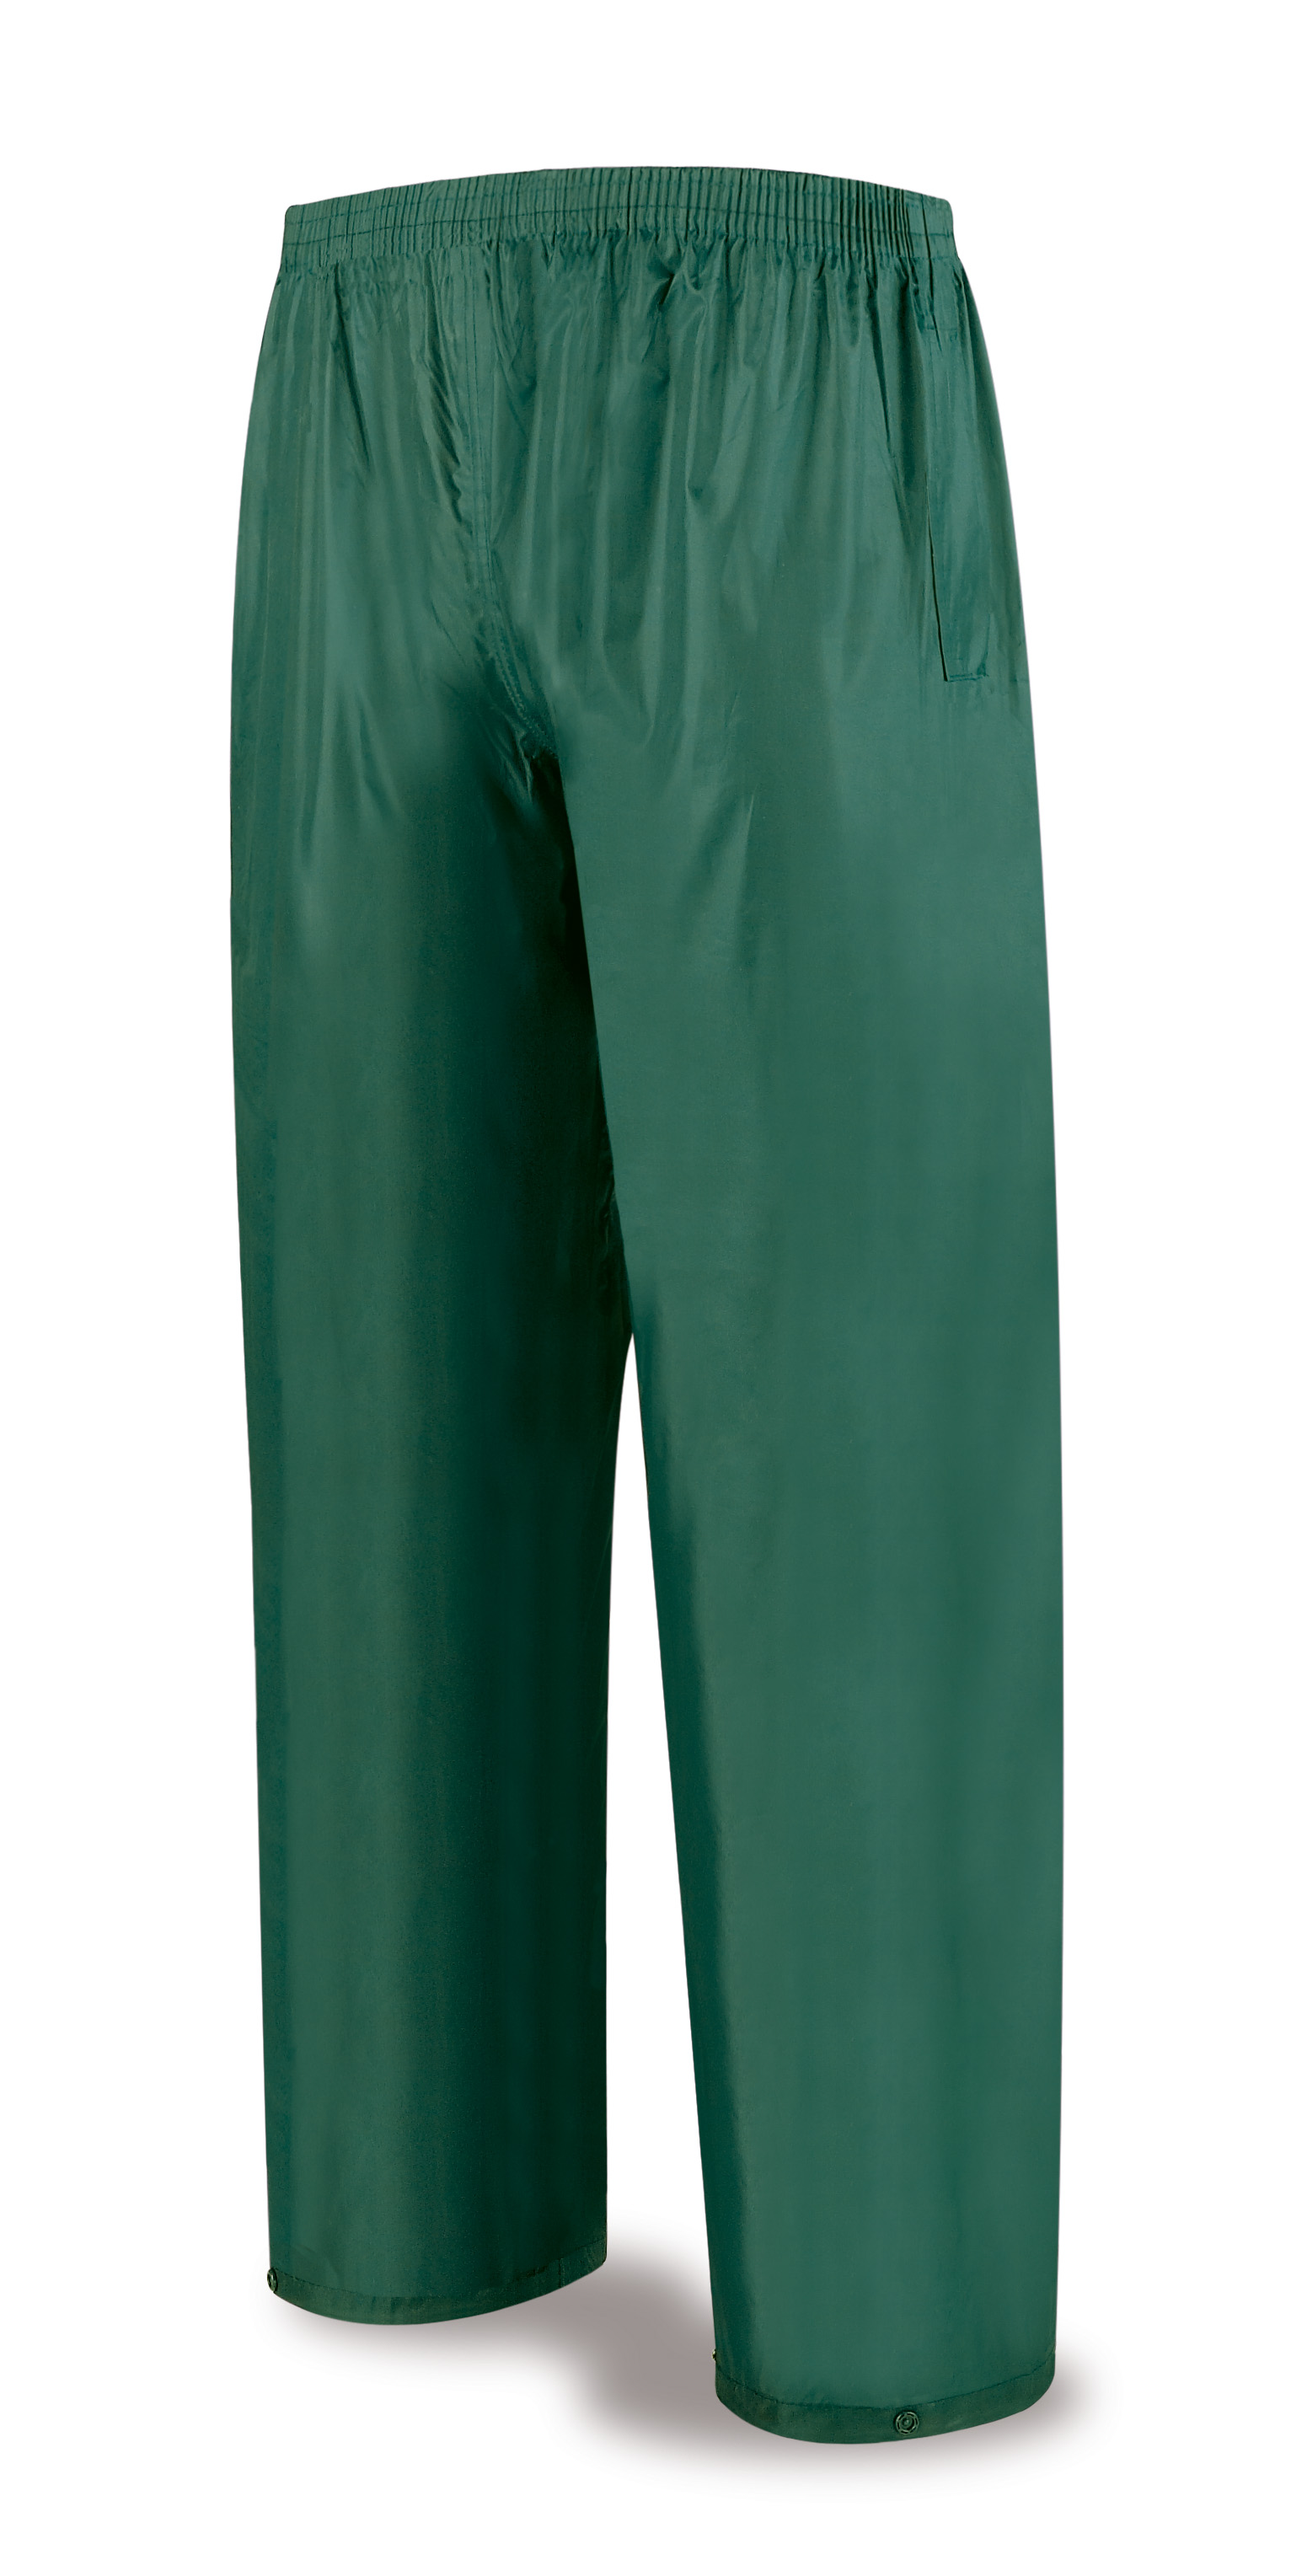 188-PAIV Abrigo y lluvia Trajes de agua Pantalón de agua. INGENIERO. Color verde